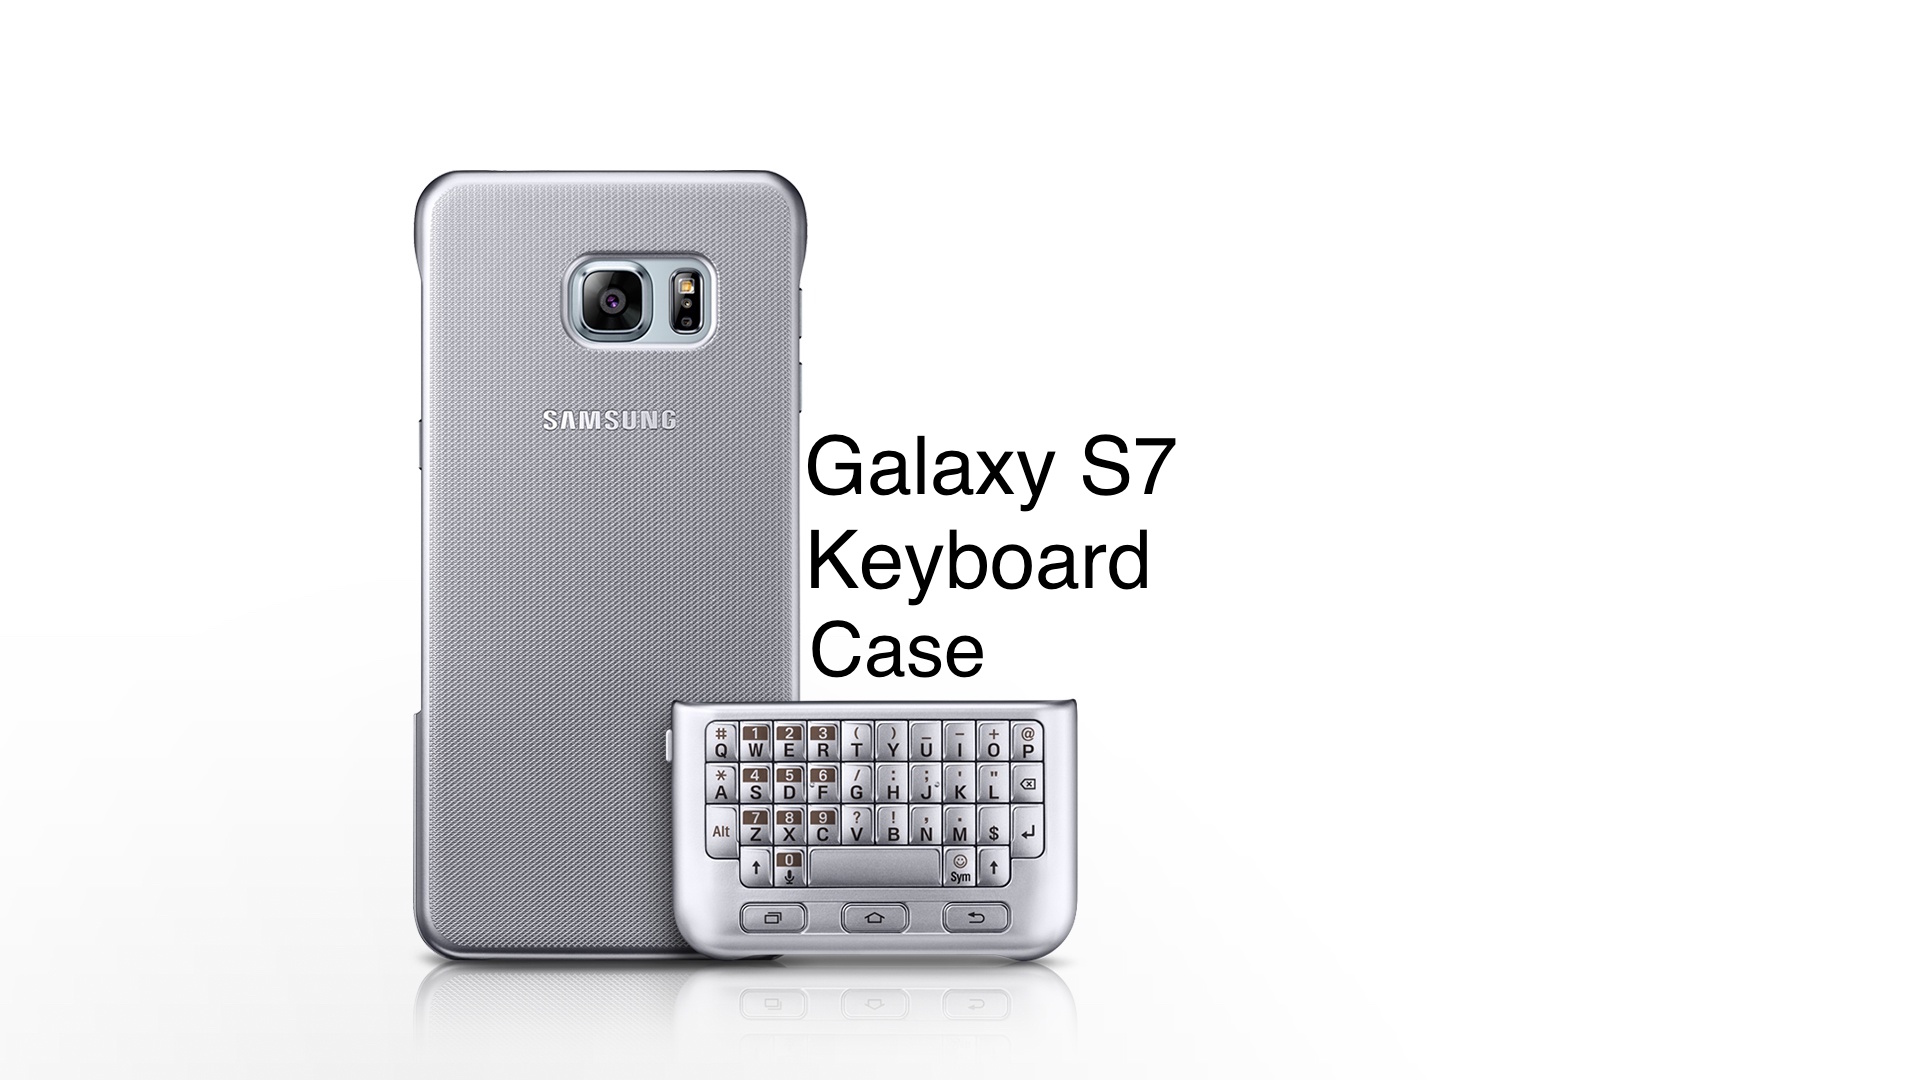 Galaxy S7 accessories